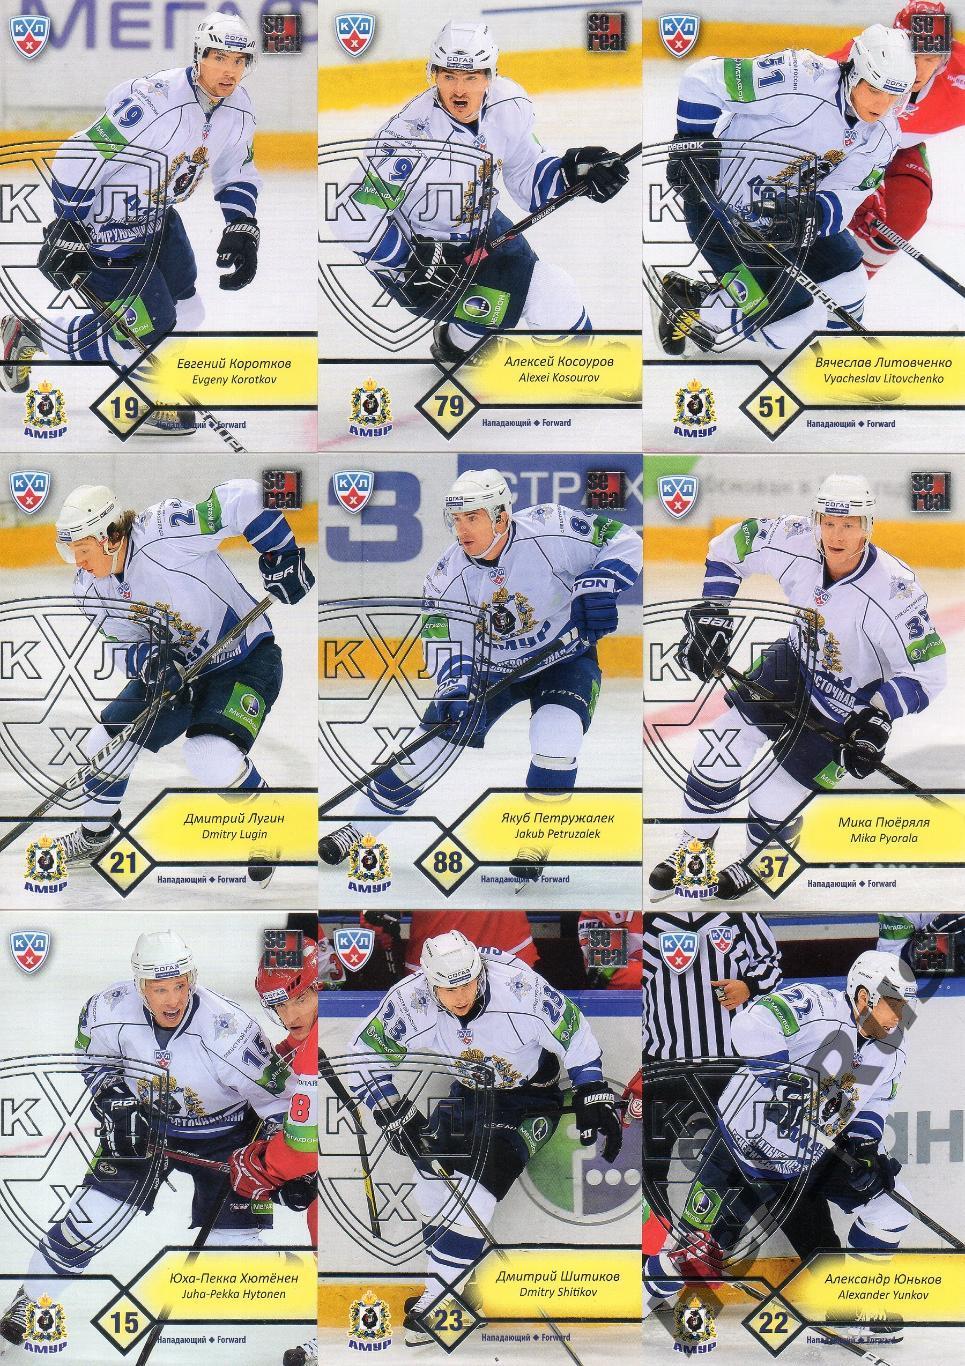 Хоккей. Амур Хабаровск 18 карточек КХЛ/KHL сезона 2012/13 SeReal (Мурыгин и др.) 2